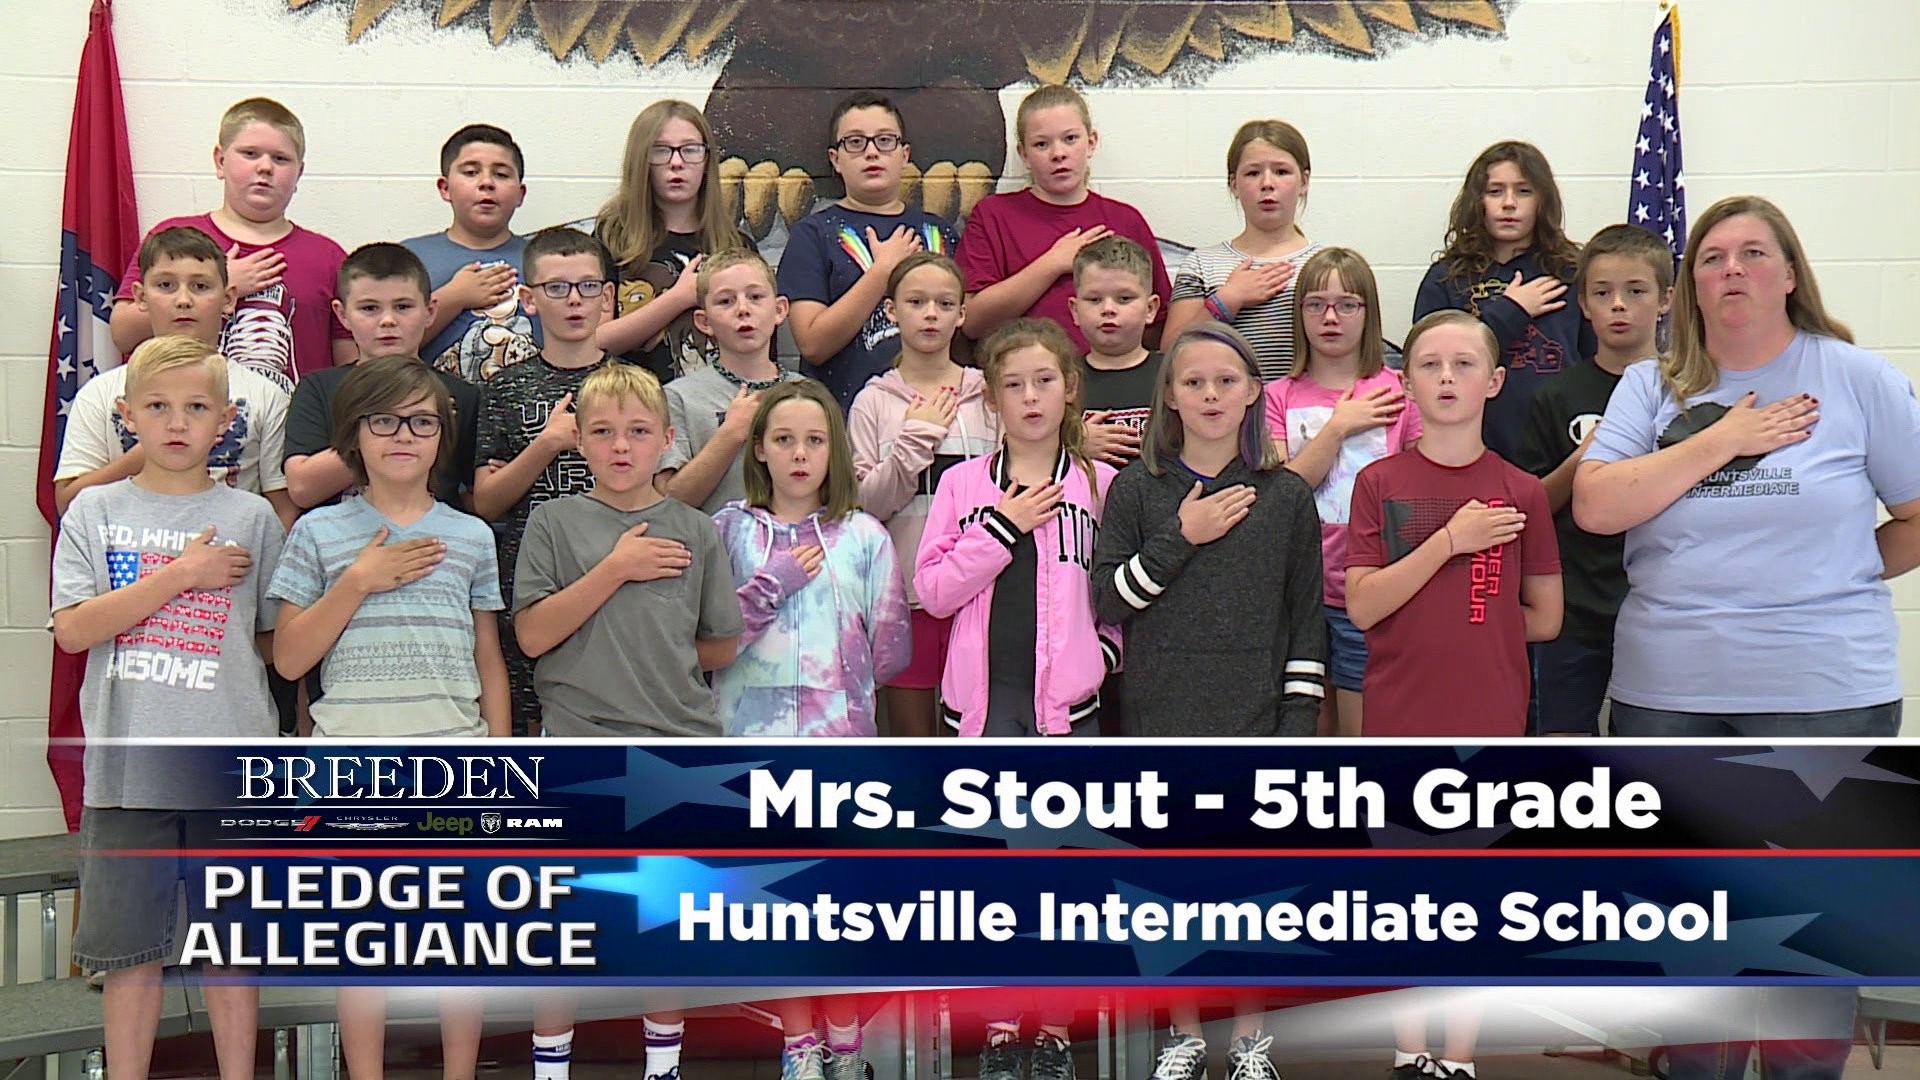 Mrs. Stout - 5th Grade Huntsville Intermediate School